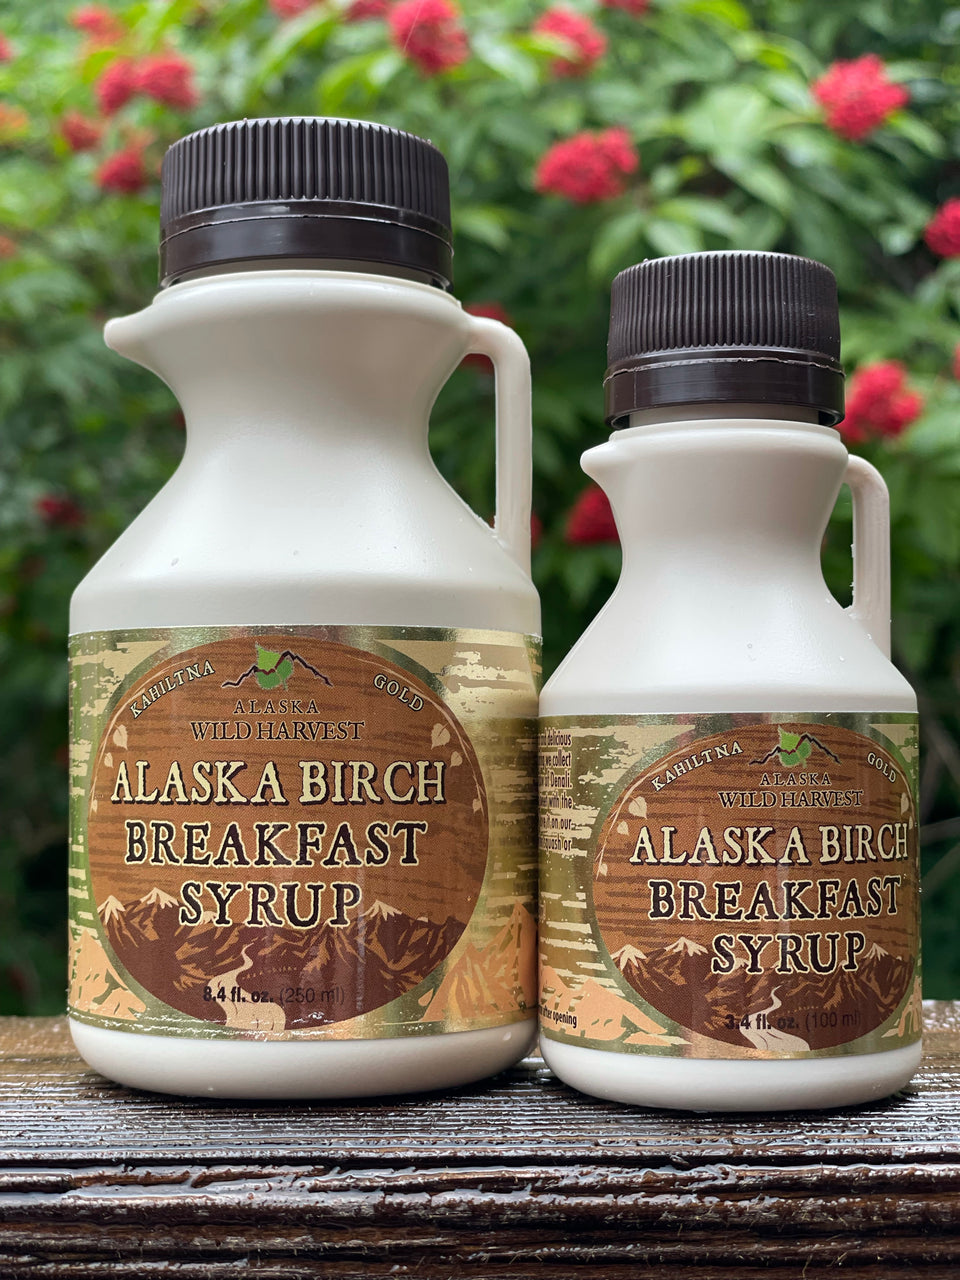 Alaska Birch Breakfast Syrup